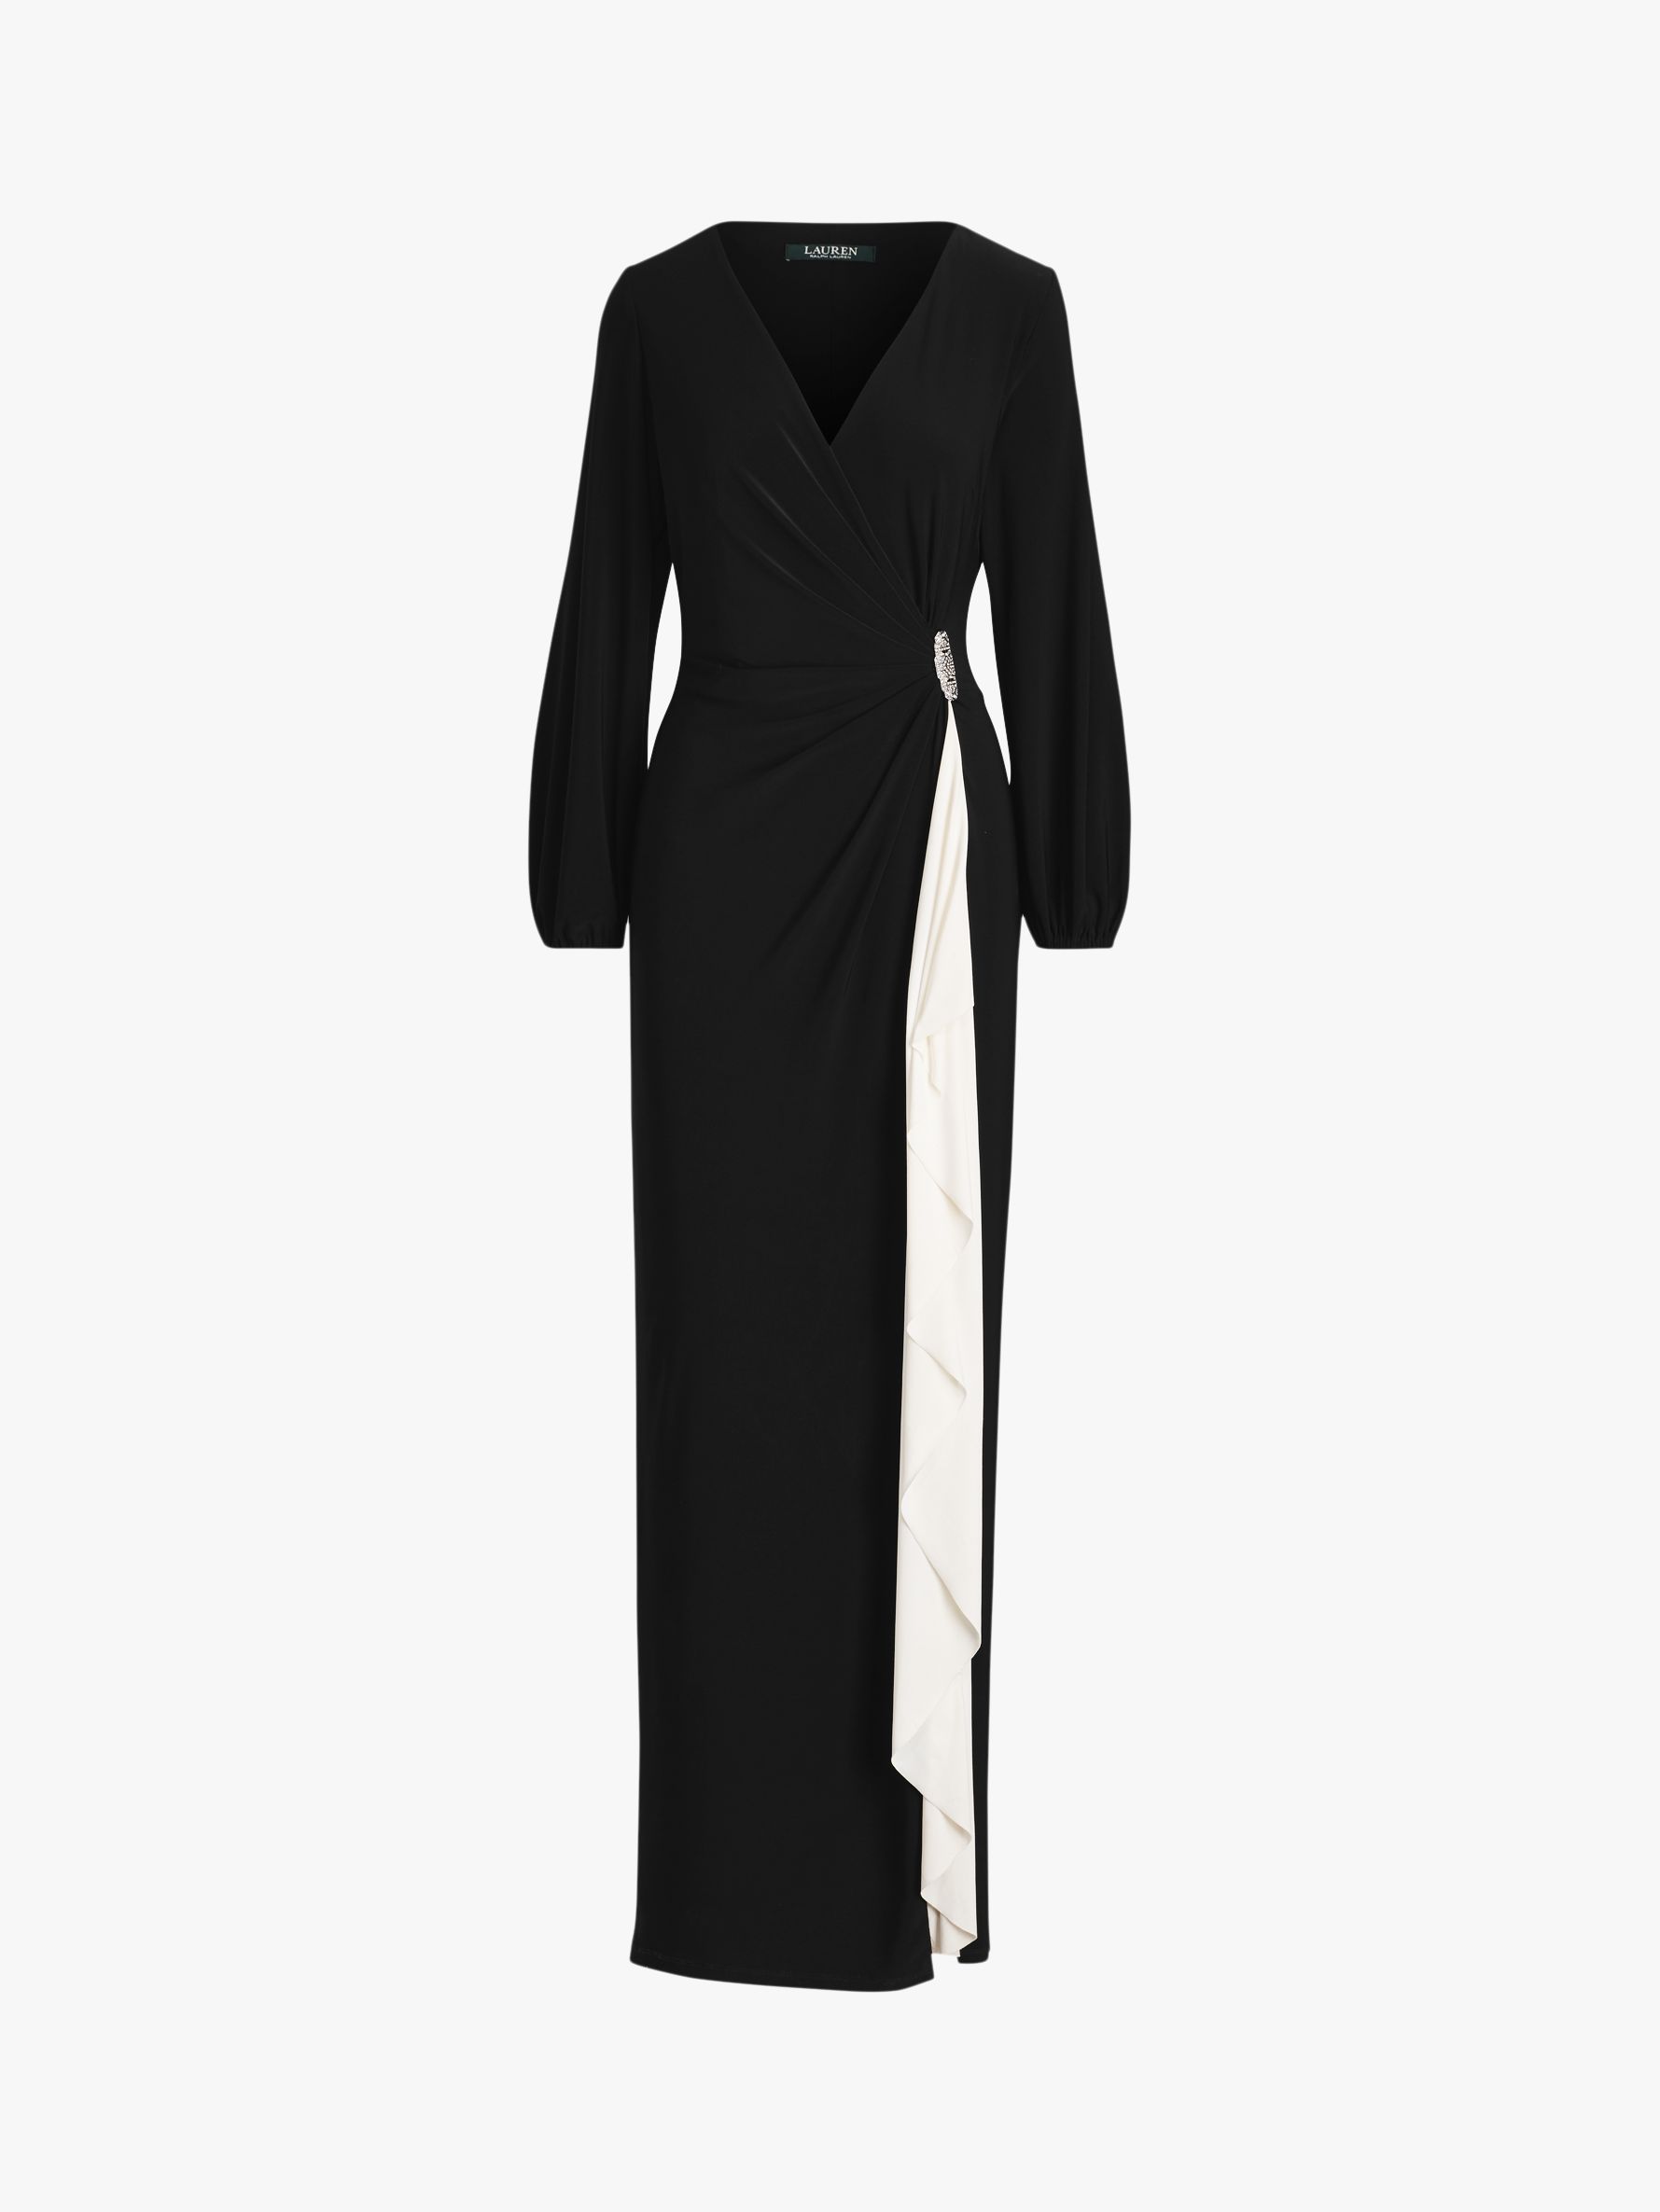 ralph lauren dress black and white